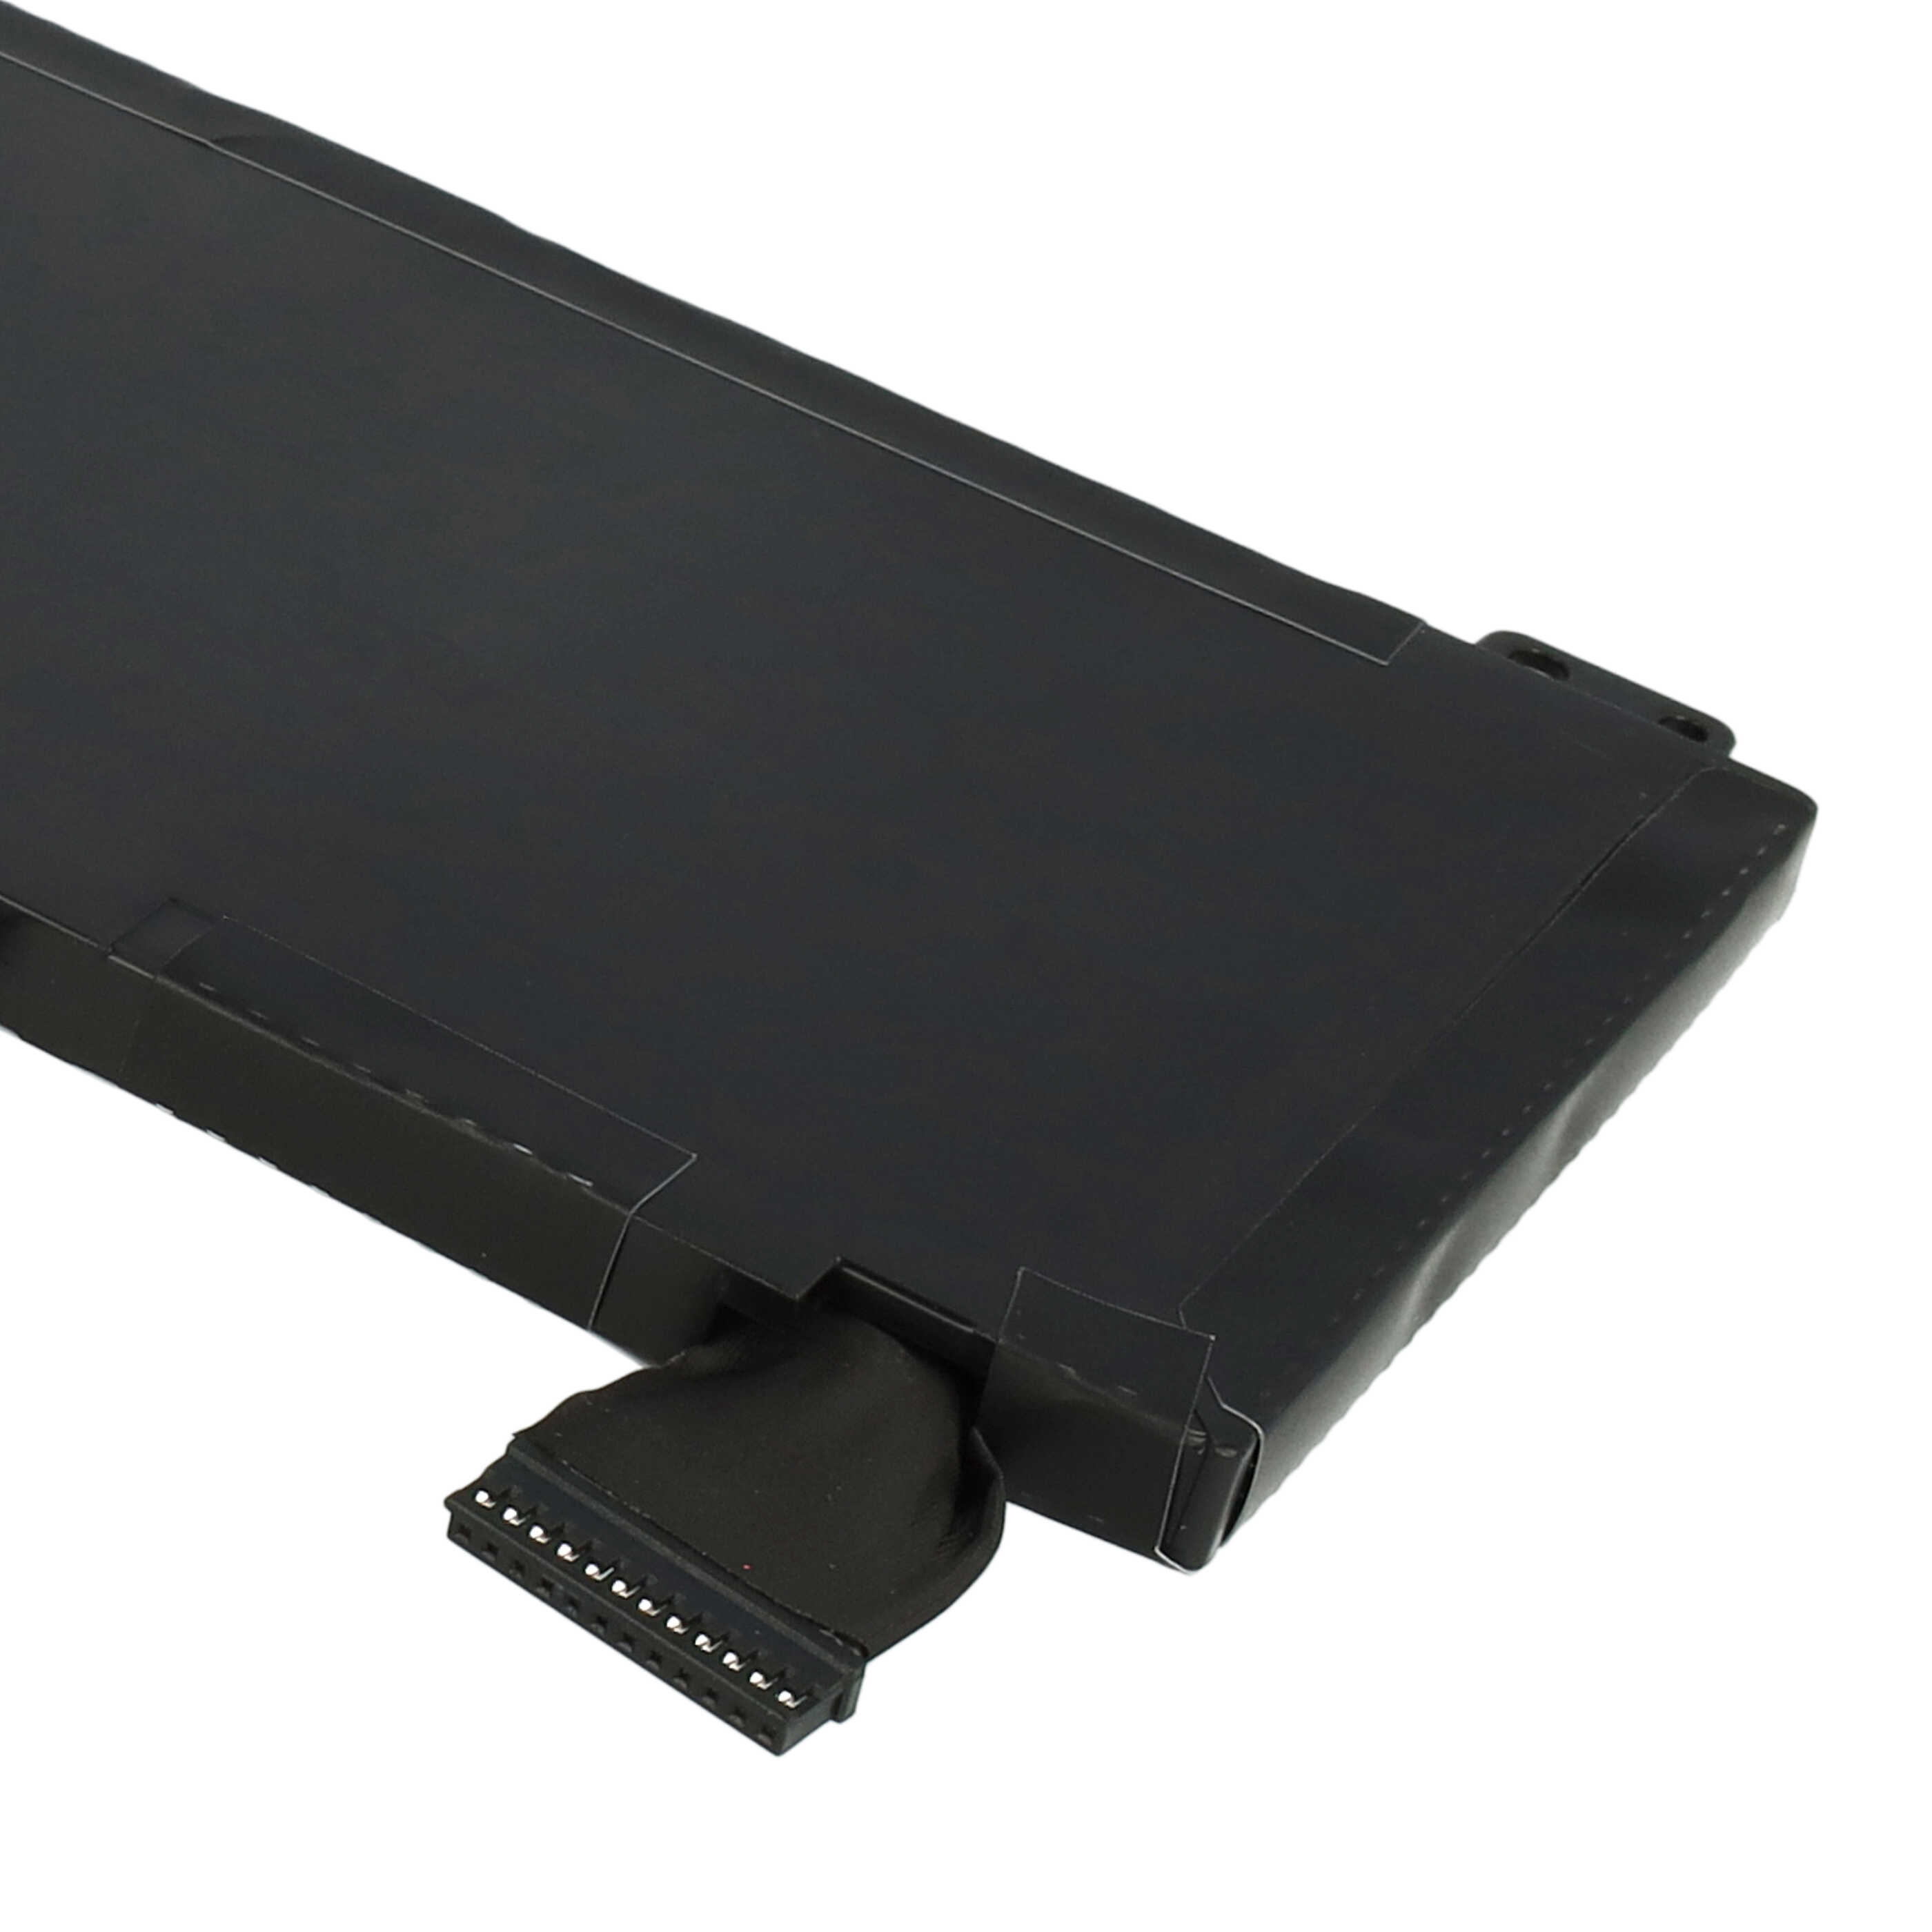 Akumulator do laptopa zamiennik Dell 0H76MY, 245RR, 7D1WJ, H76MV, 07D1WJ, CN-0T0TRM - 5400 mAh 11,1 V LiPo